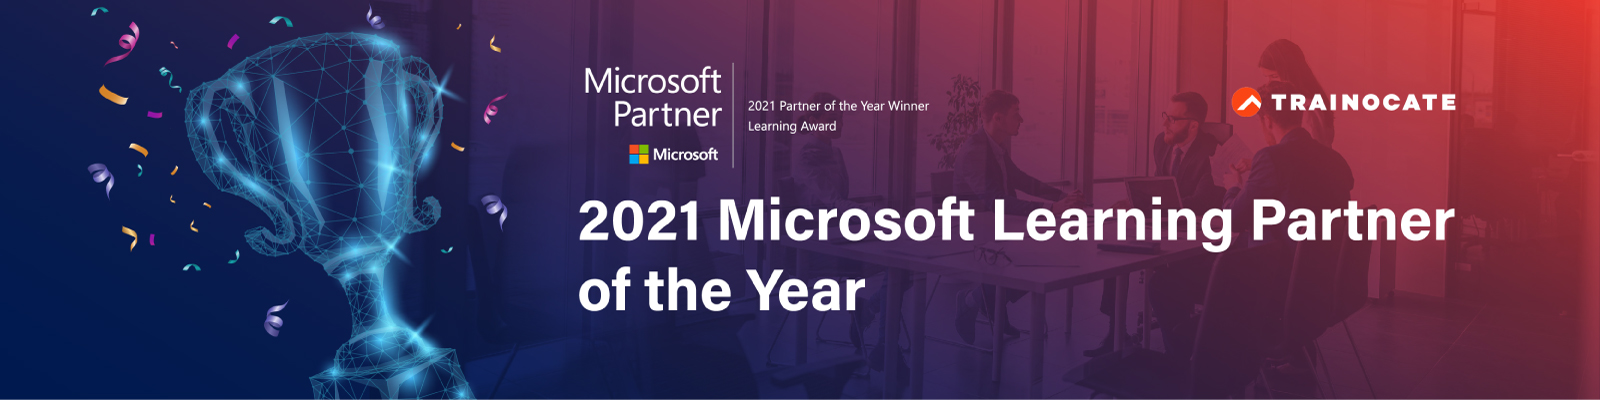 trainocate-microsoft-learning-partner-award-2021-02